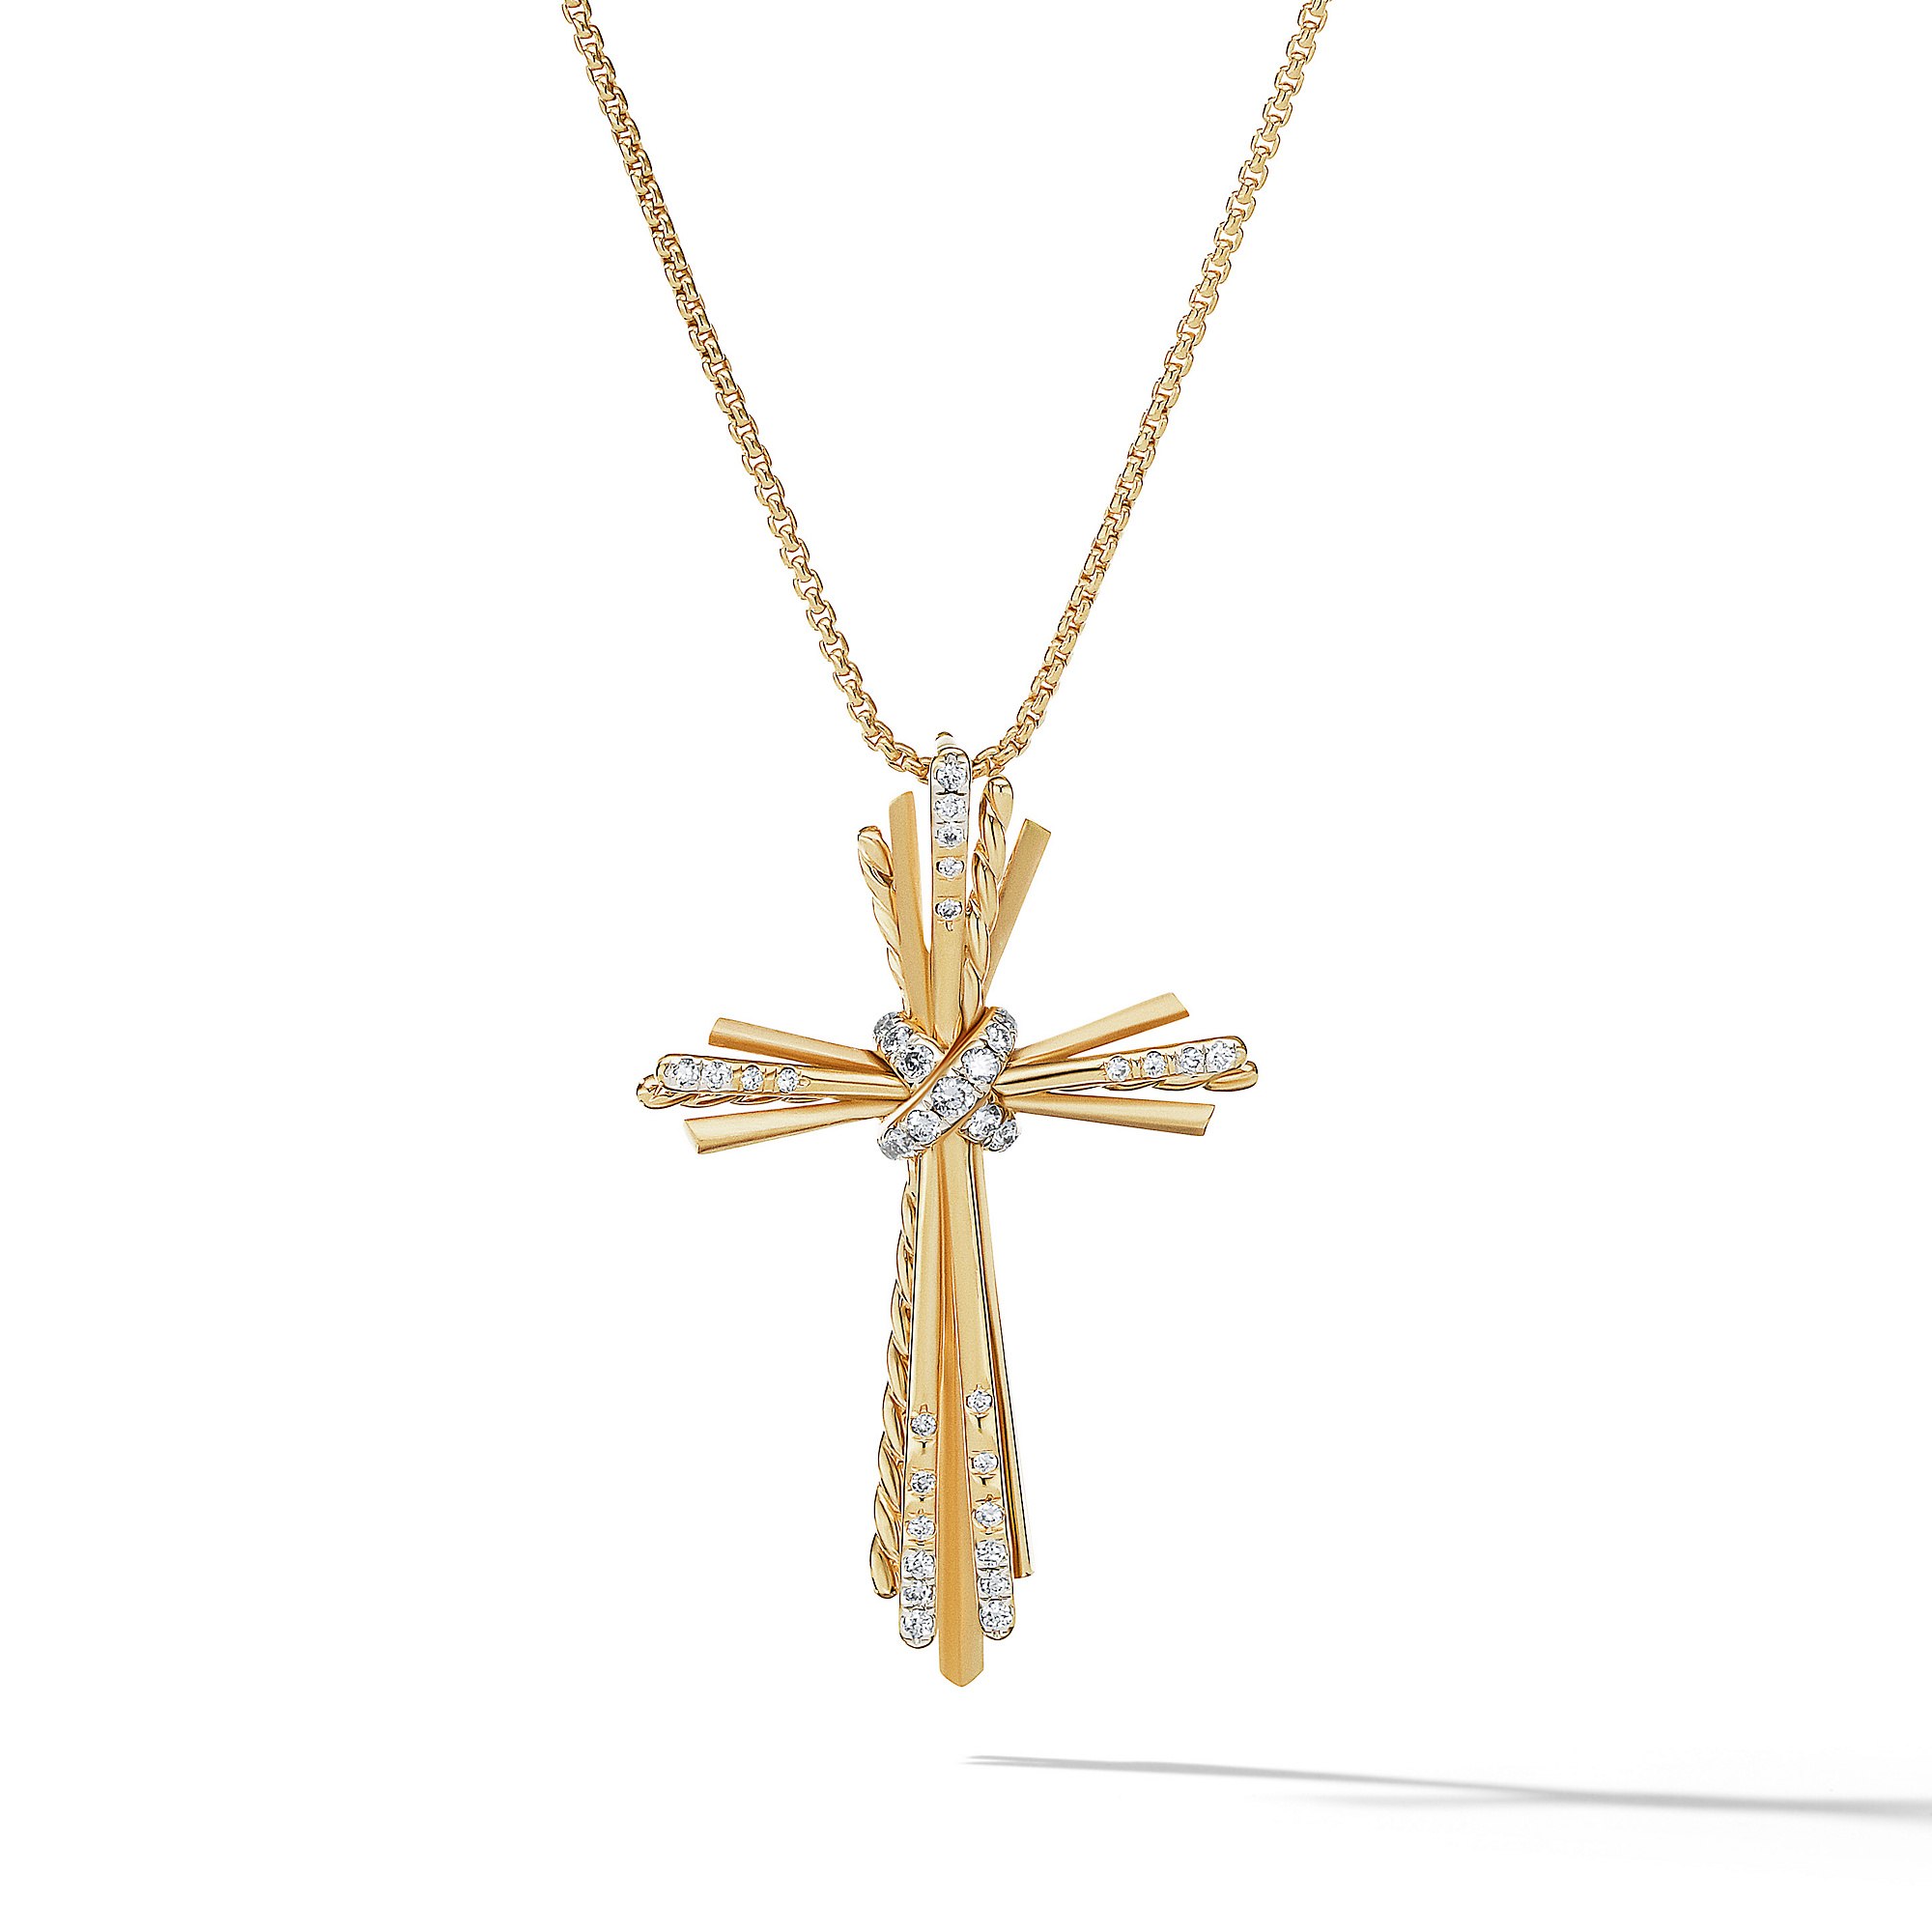 David Yurman Angelika Cross Necklace, 34mm, in 18K Yellow Gold with Pave Diamonds 0